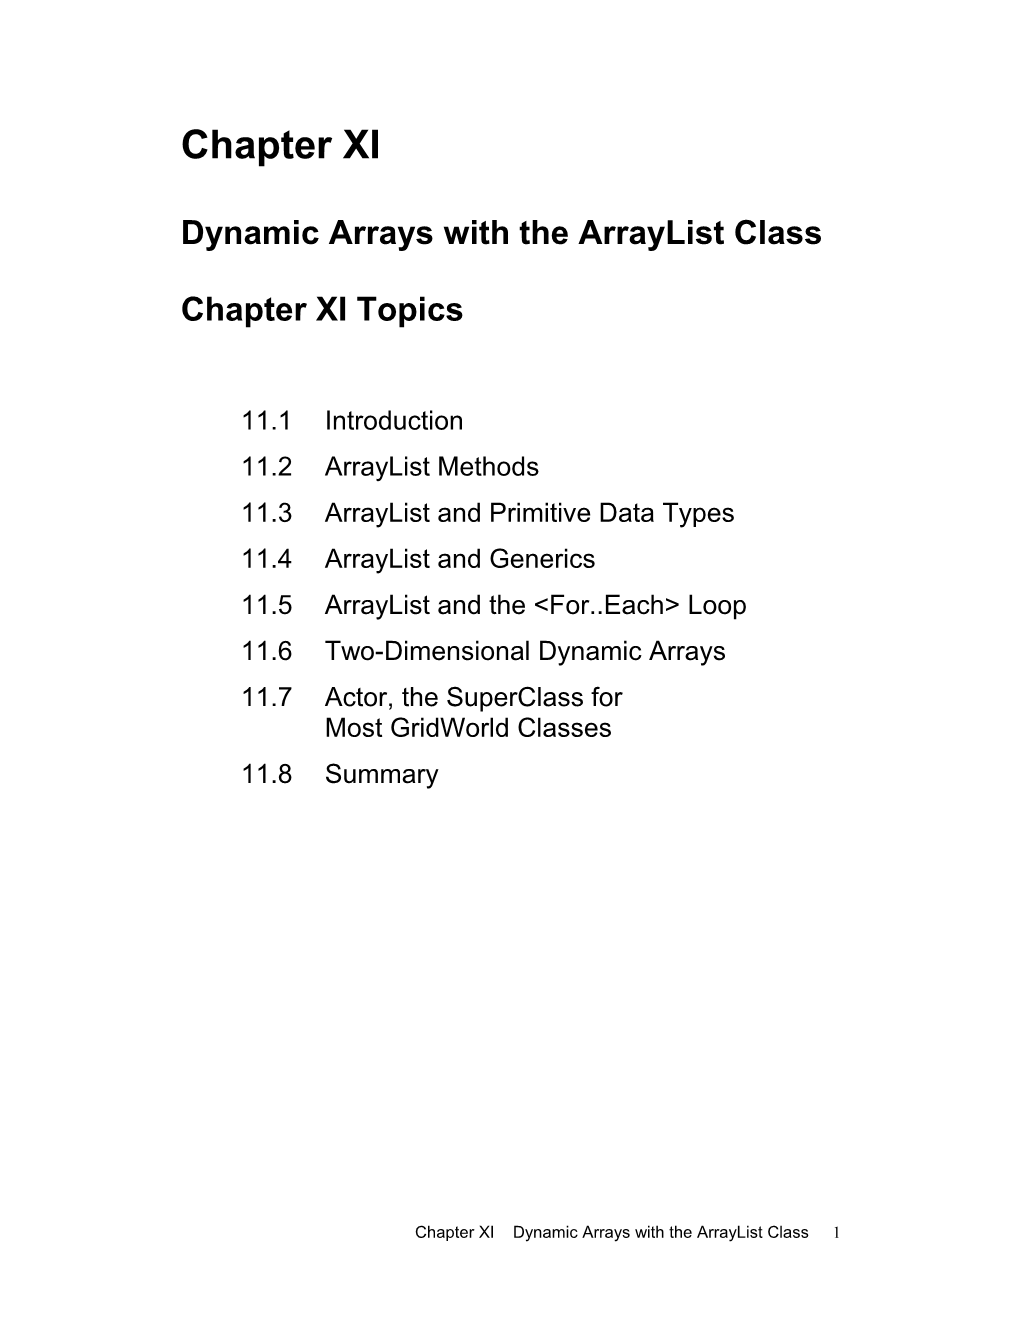 Dynamic Arrays with the Arraylist Class